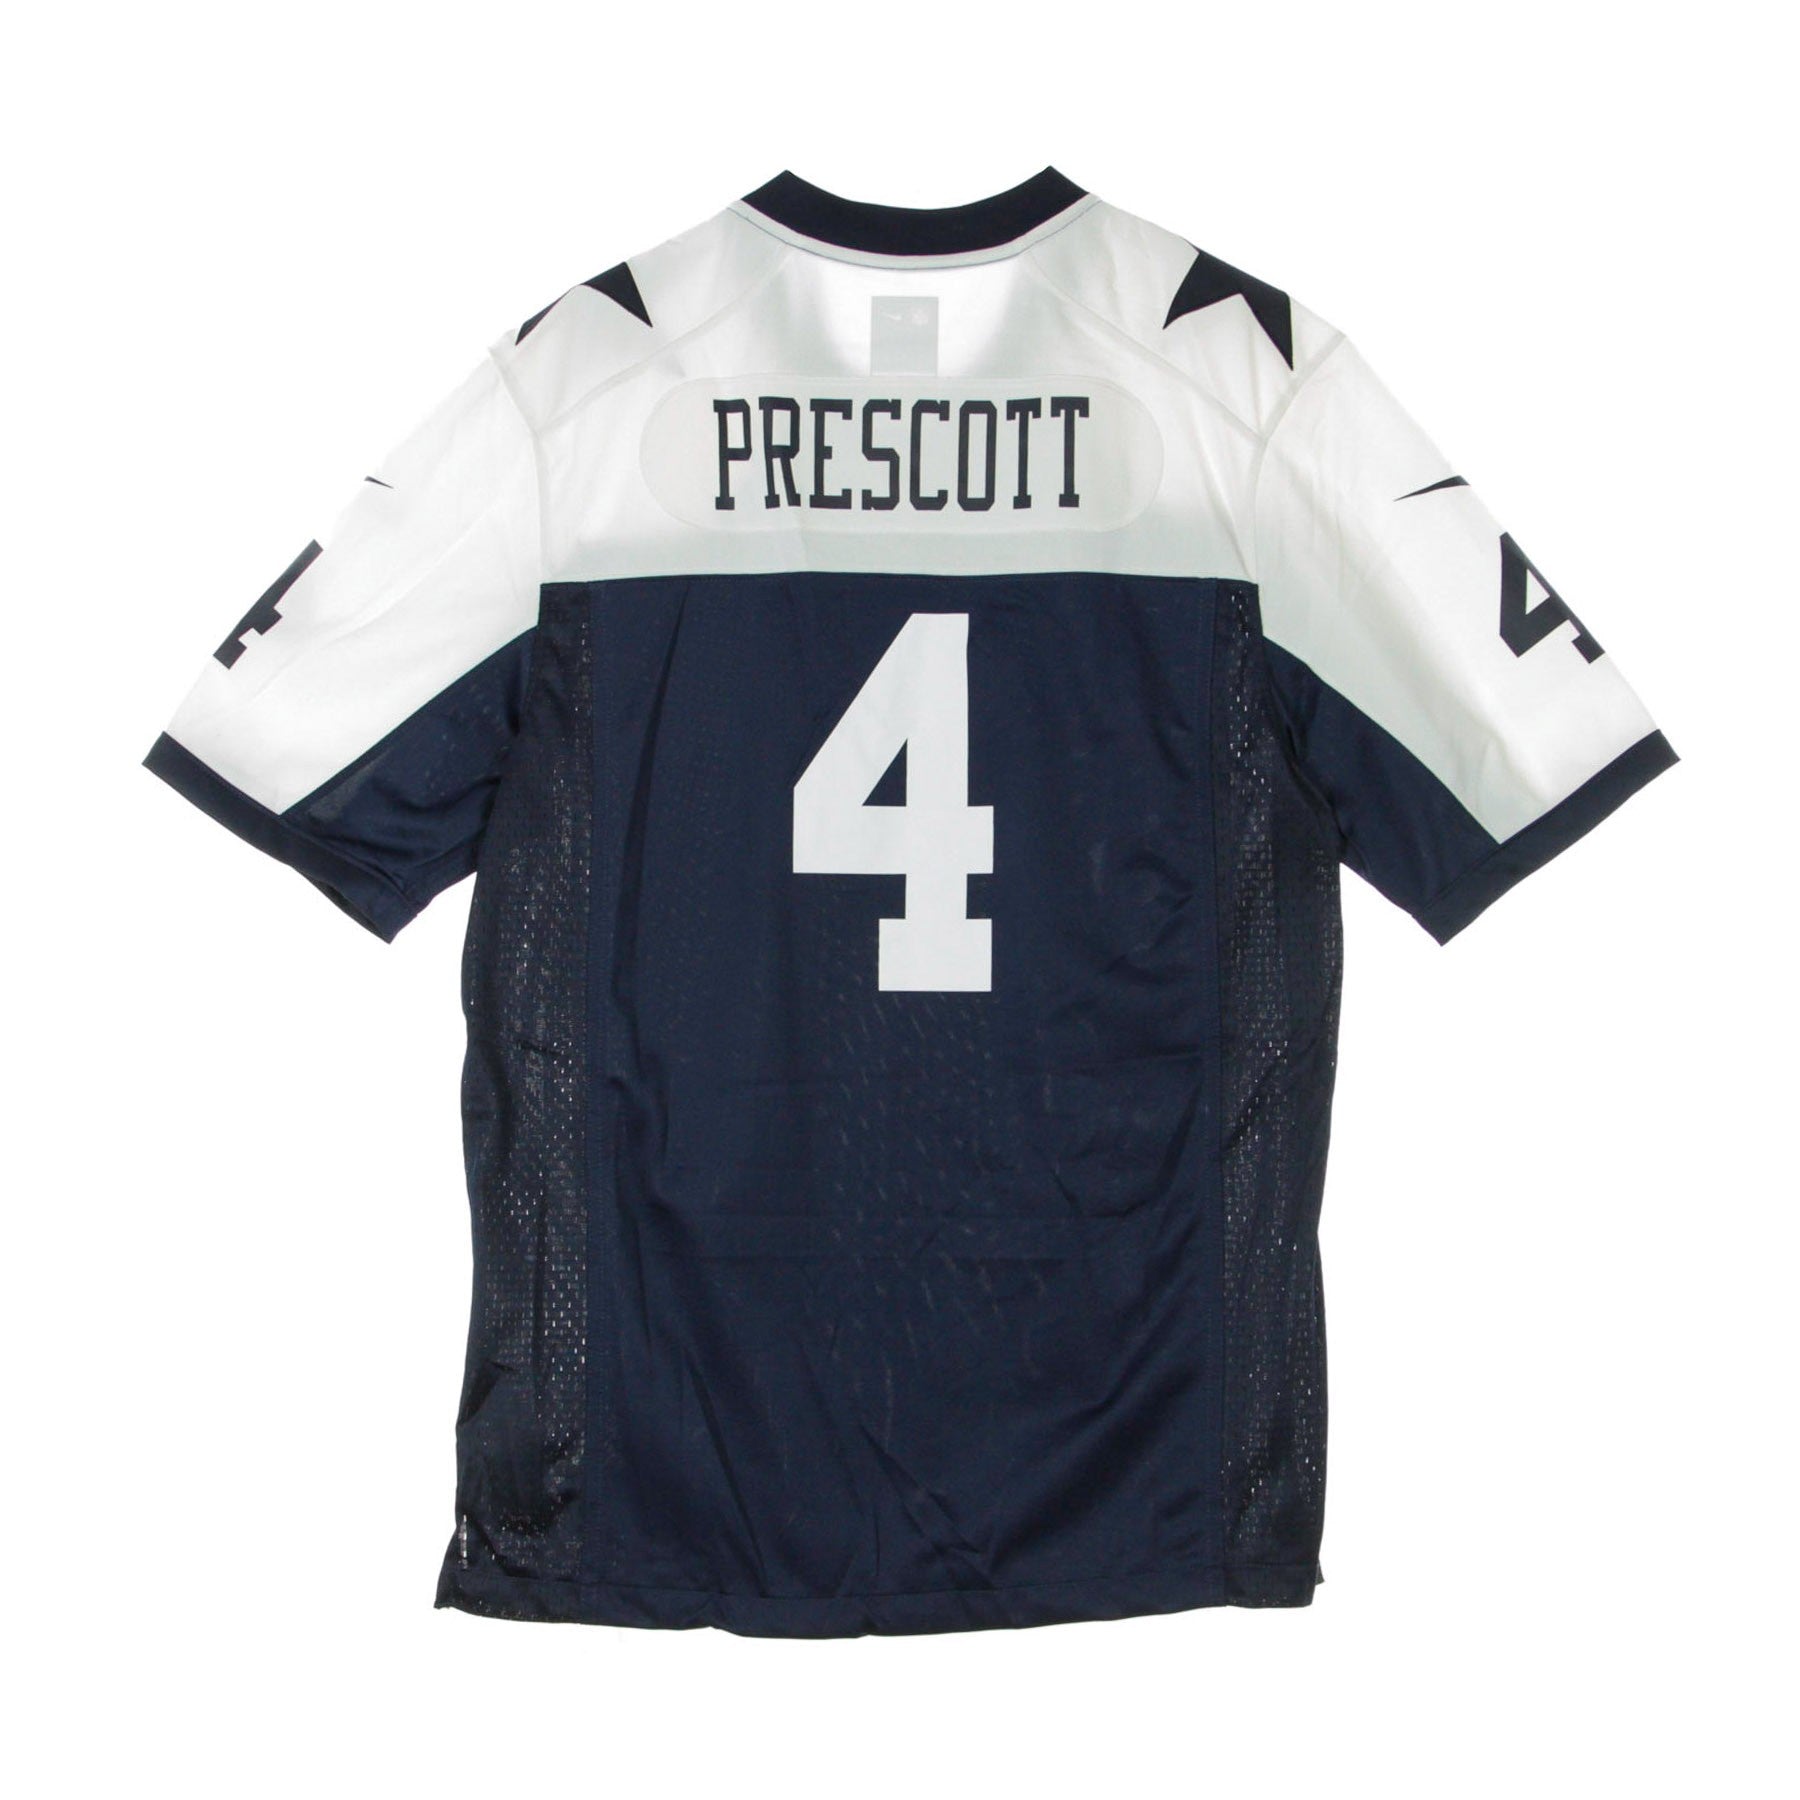 American Football Jacket Men's NFL Game Alternate Jersey No.4 Prescott Dalcow Original Team Colors